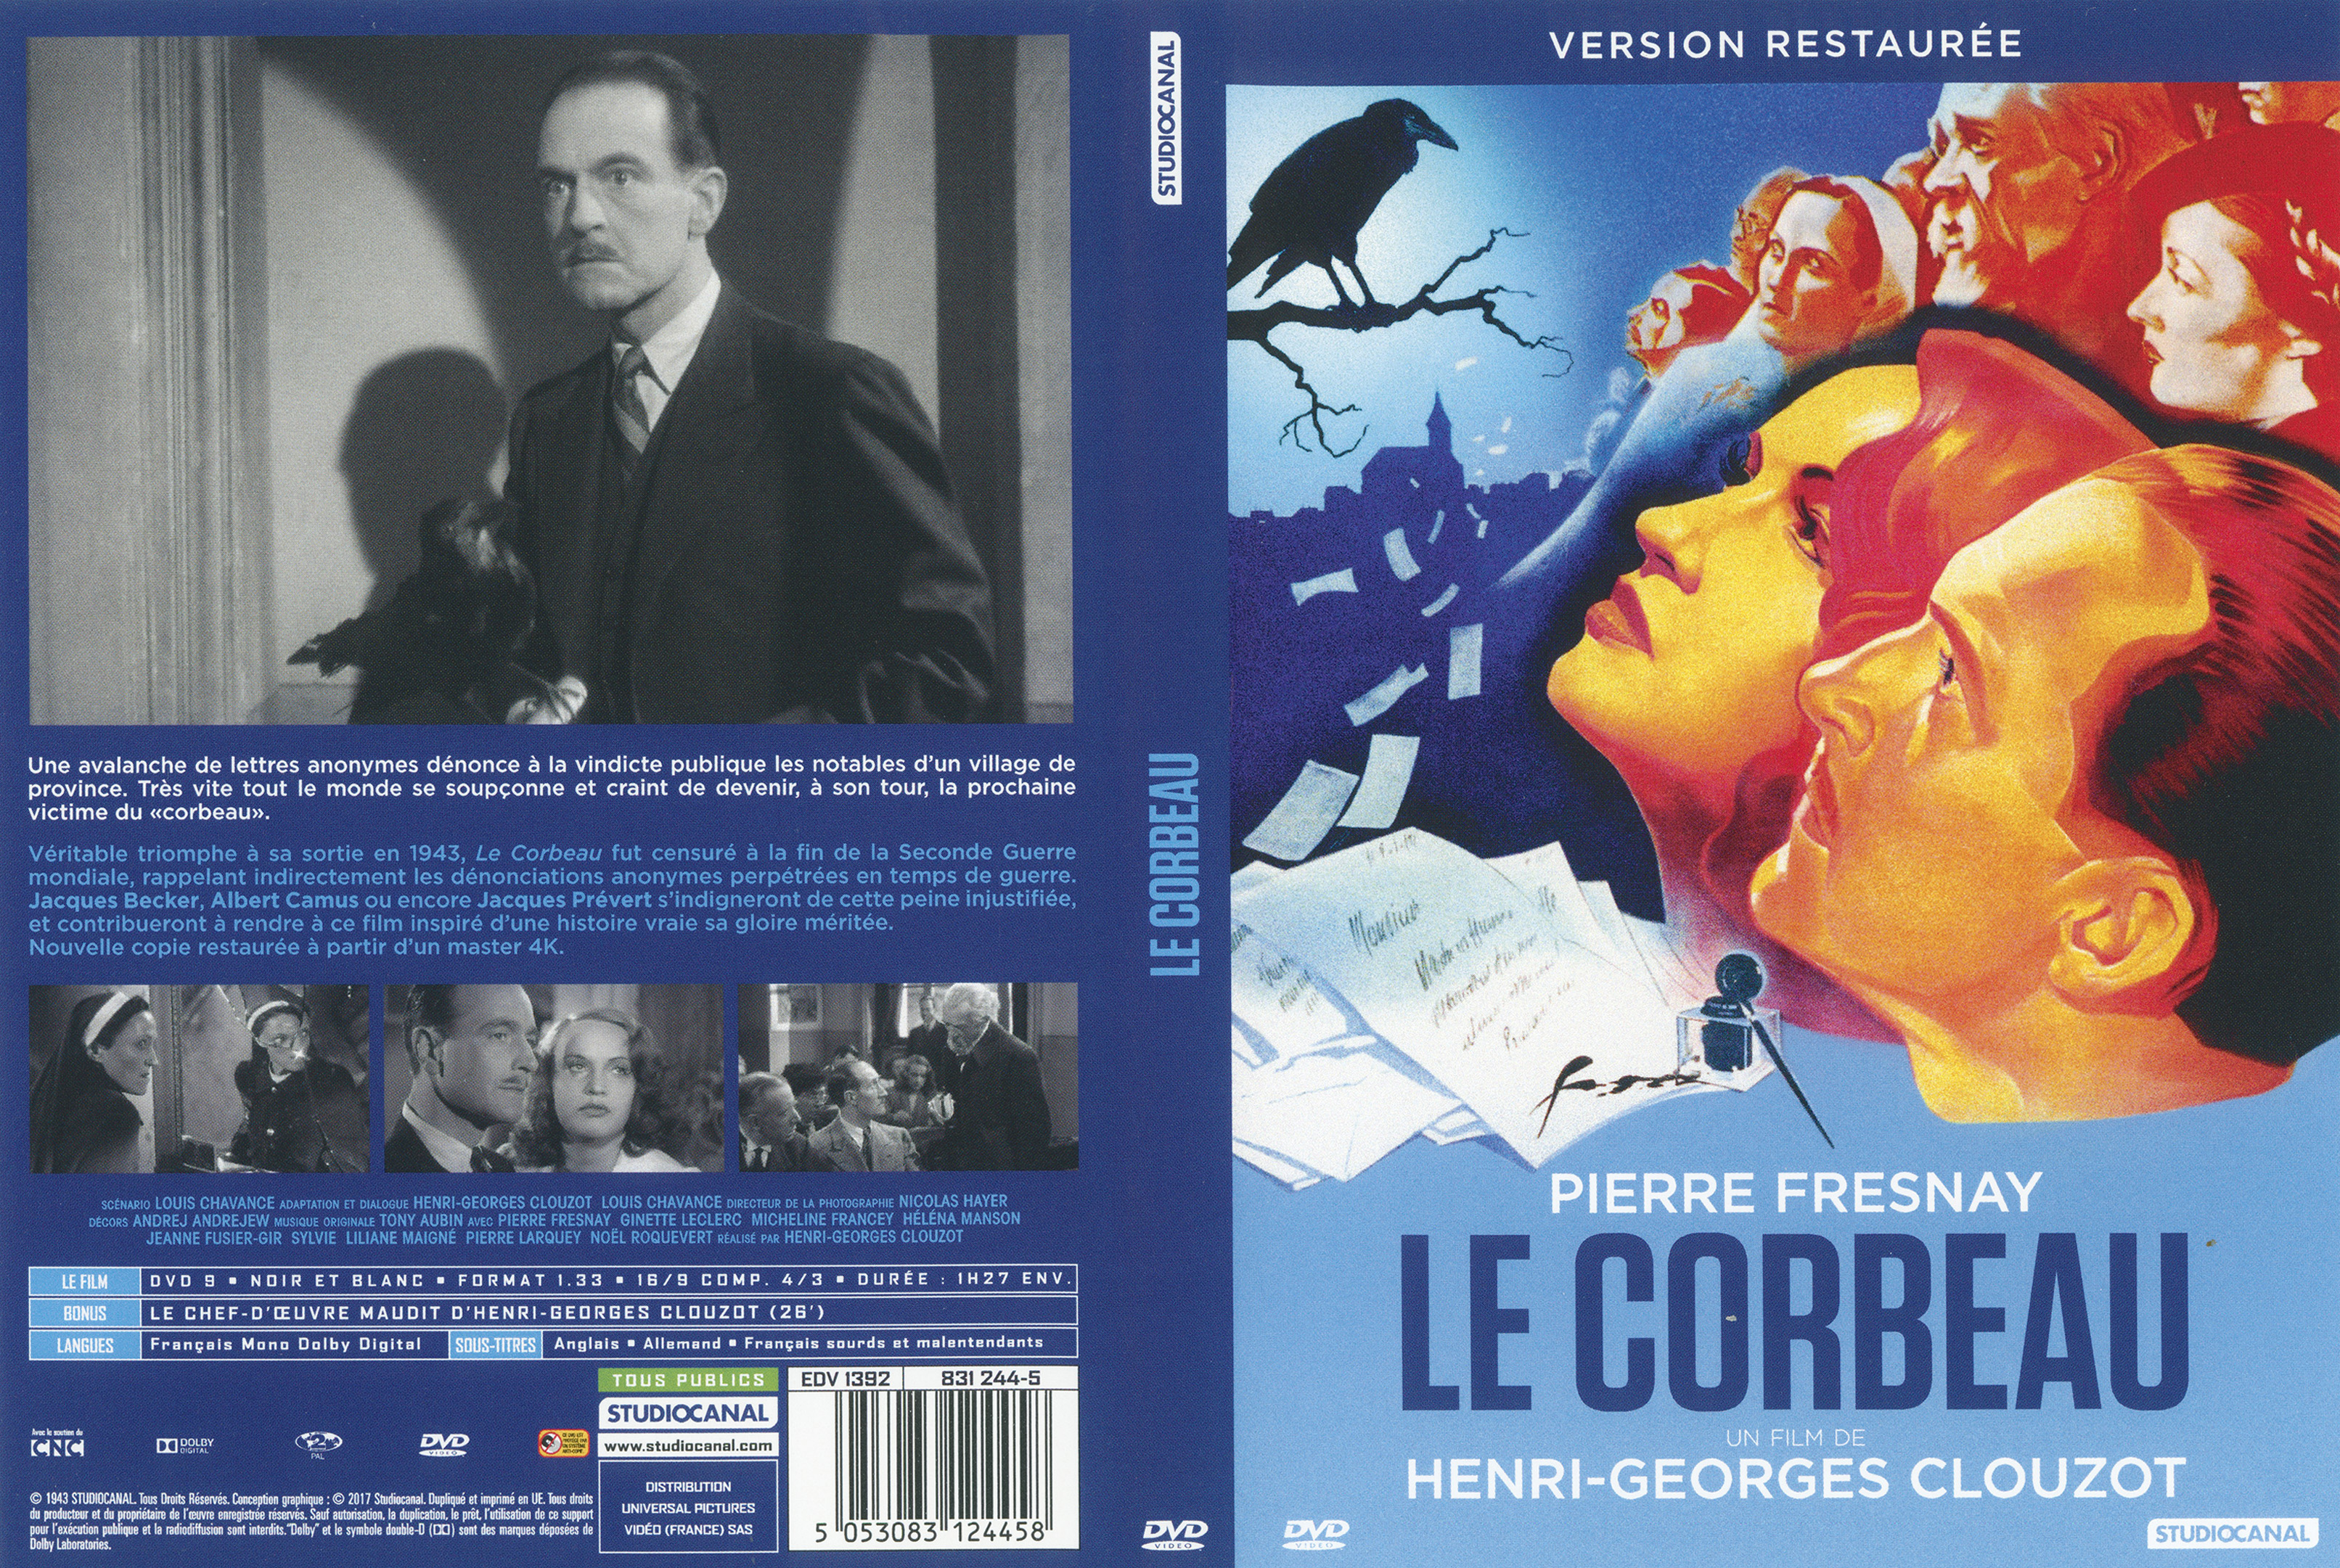 Jaquette DVD Le corbeau (1943) v3